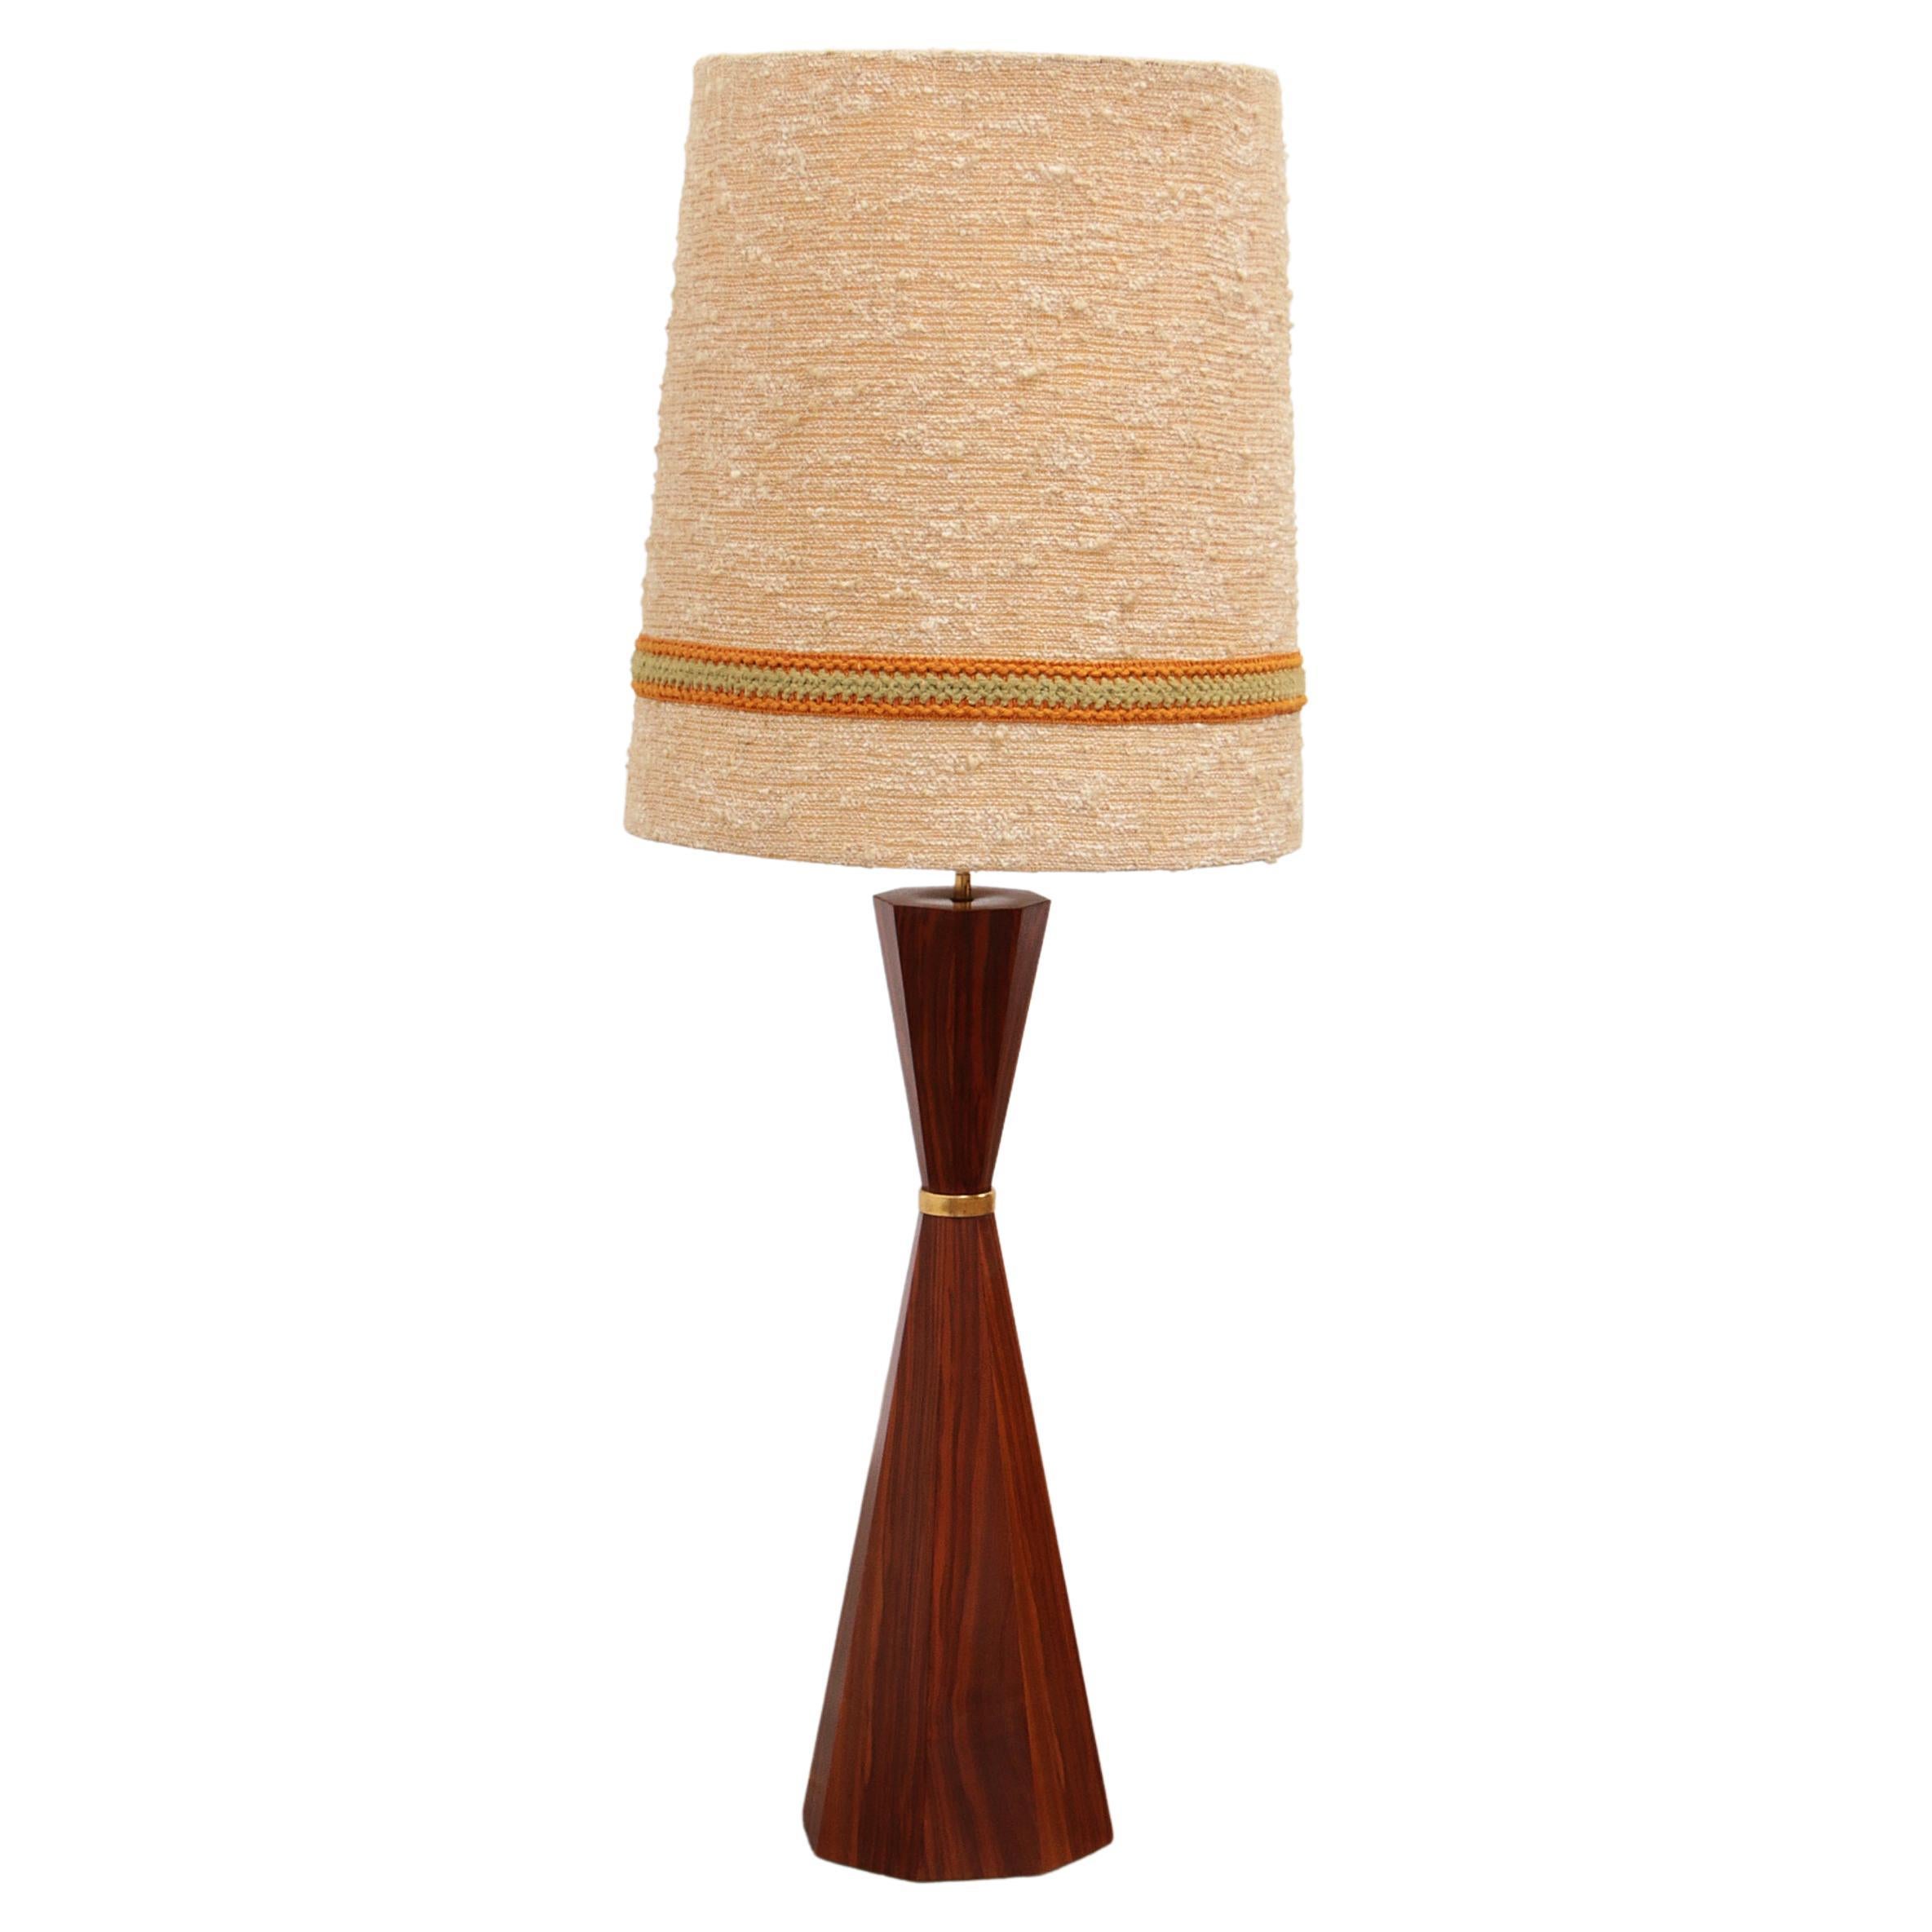 Vintage Danish Teak Floor Lamp with Original Shade - 1960s For Sale